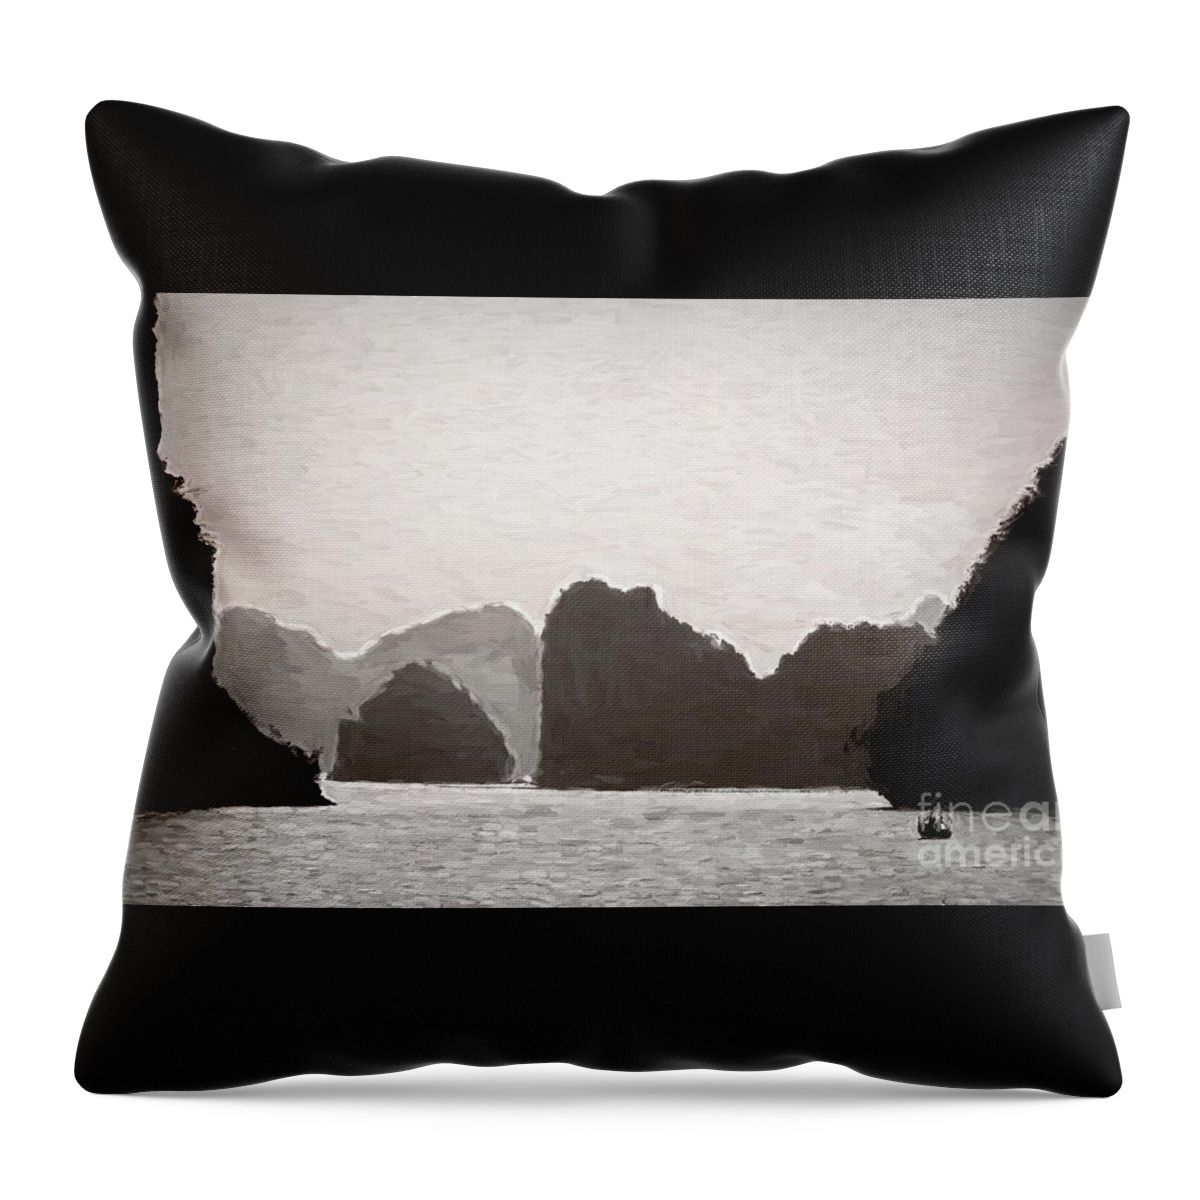 Vietnam Throw Pillow featuring the painting BW Artistic Texture Ha Long Bay Vietnam by Chuck Kuhn